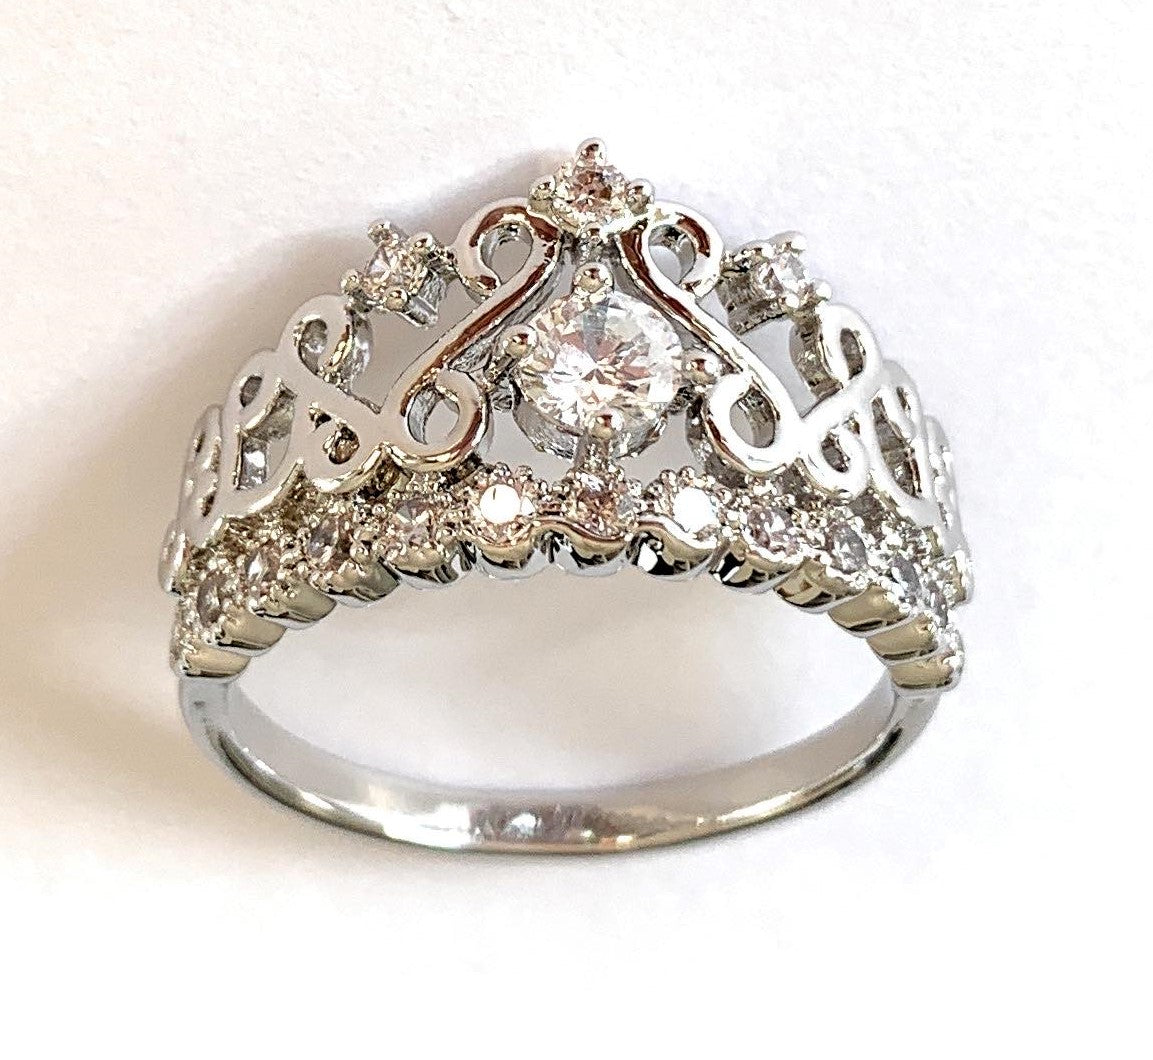 Golden Zirconia Princess Crown Ring at Rs 475 in Delhi | ID: 21418341530